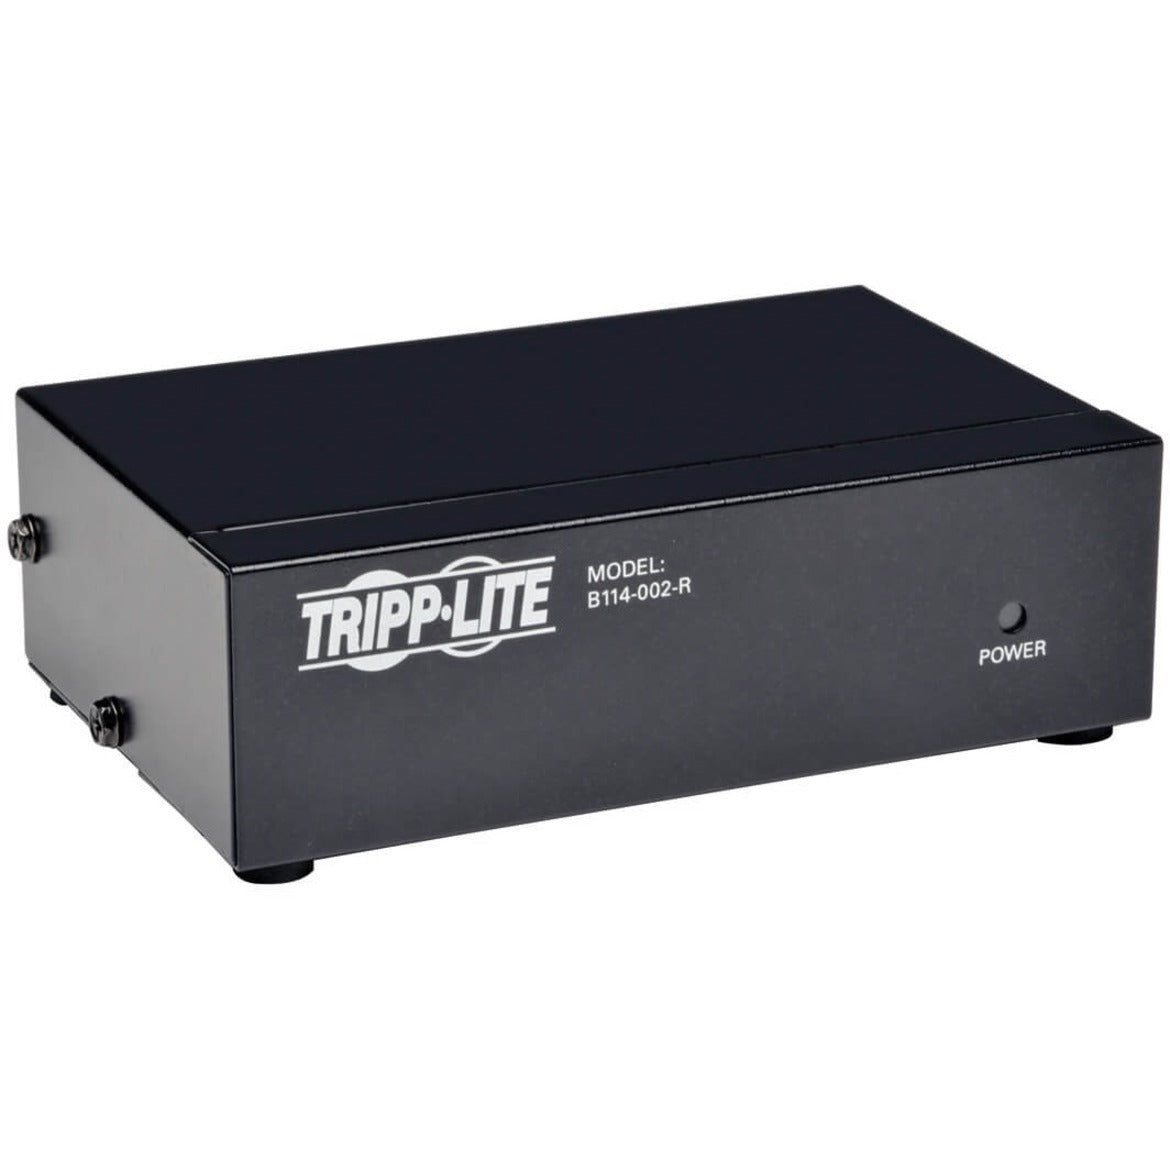 Tripp Lite B114-002-R Two-port VGA/SVGA Video Splitter, HD15, Black, 350 MHz Maximum Video Bandwidth